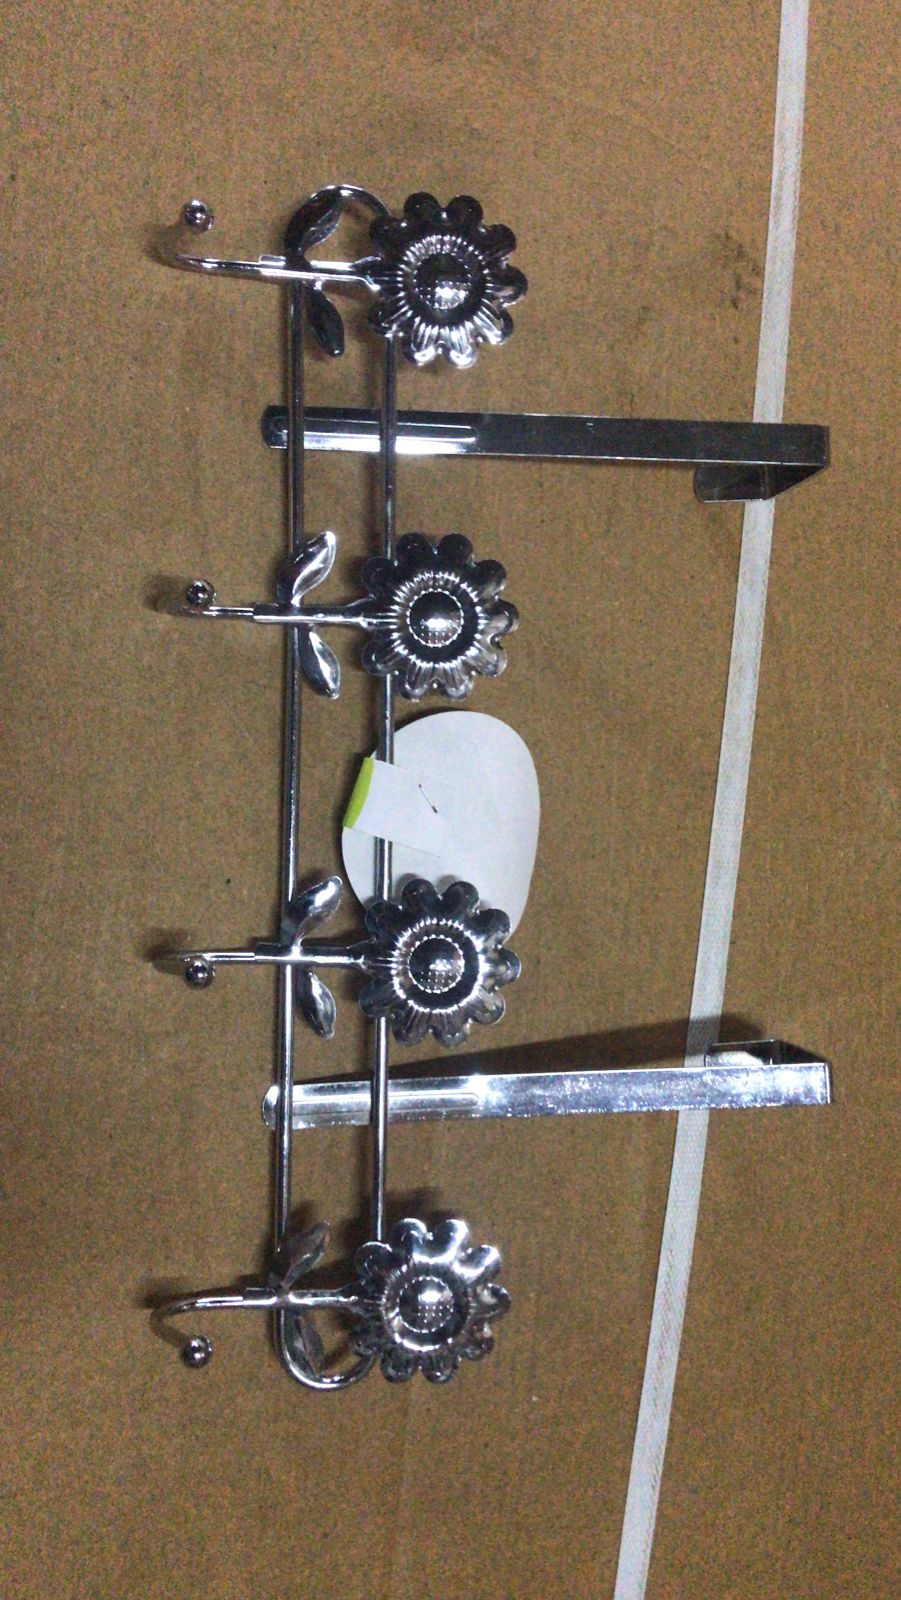 9096 Stainless Steel 4 Pin Wall/Door Mounted Cloth/key Holder Hook Rail, Key Holder. DeoDap